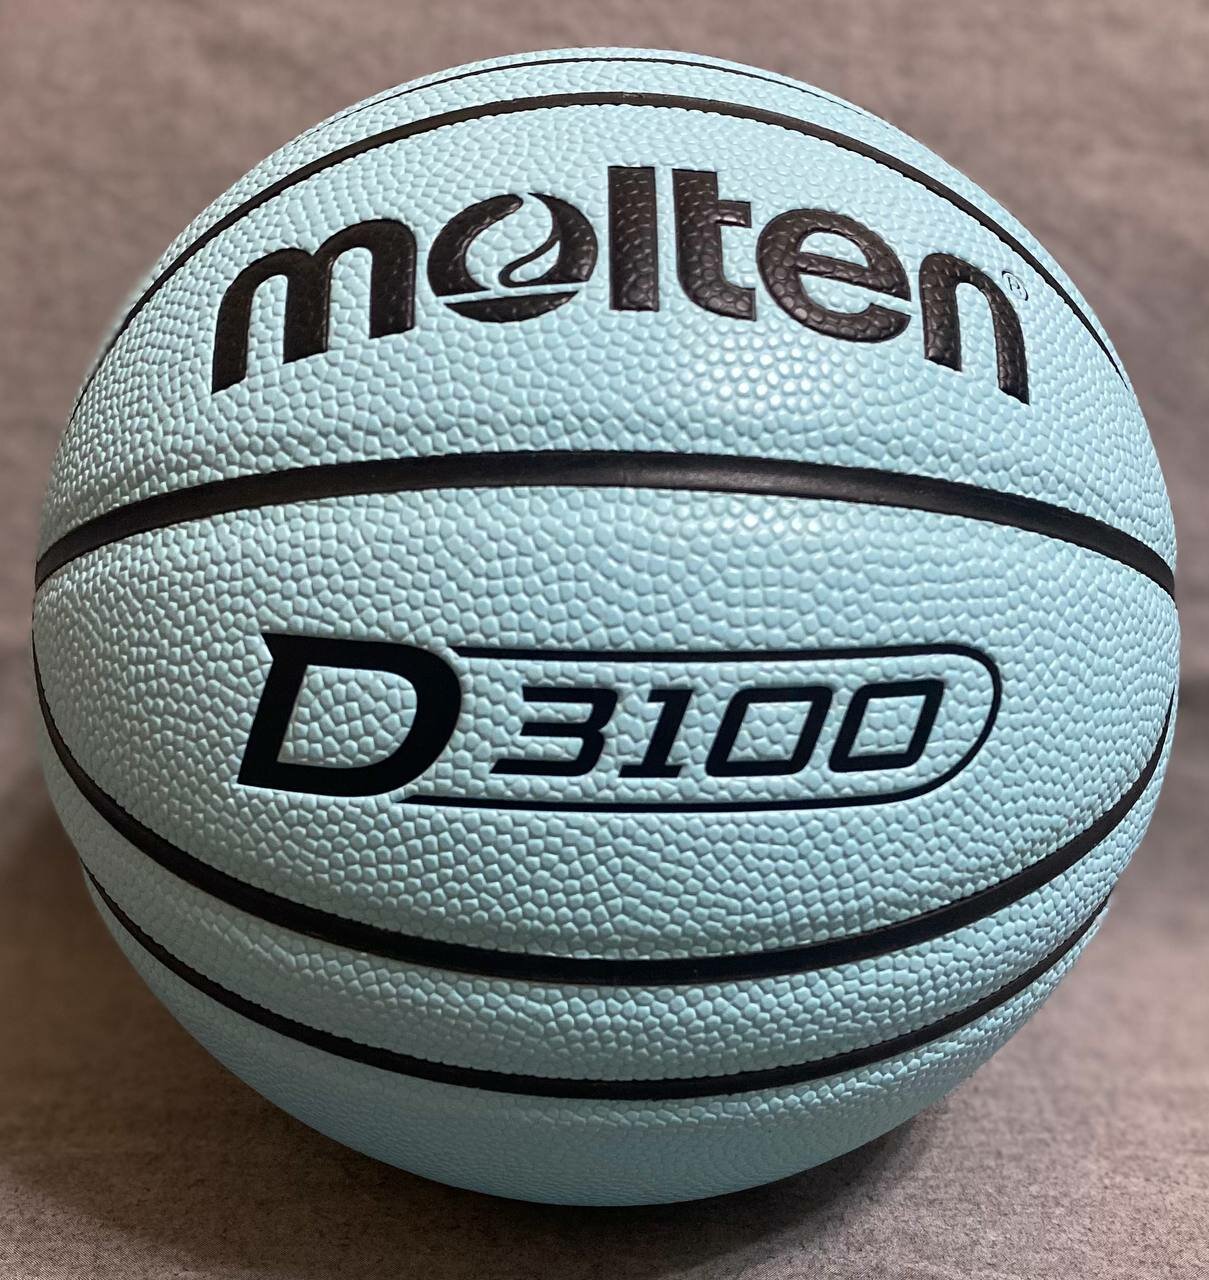 Баскетбольный мяч Molten BD3100. Размер 5. Blue. Indoor/Outdoor